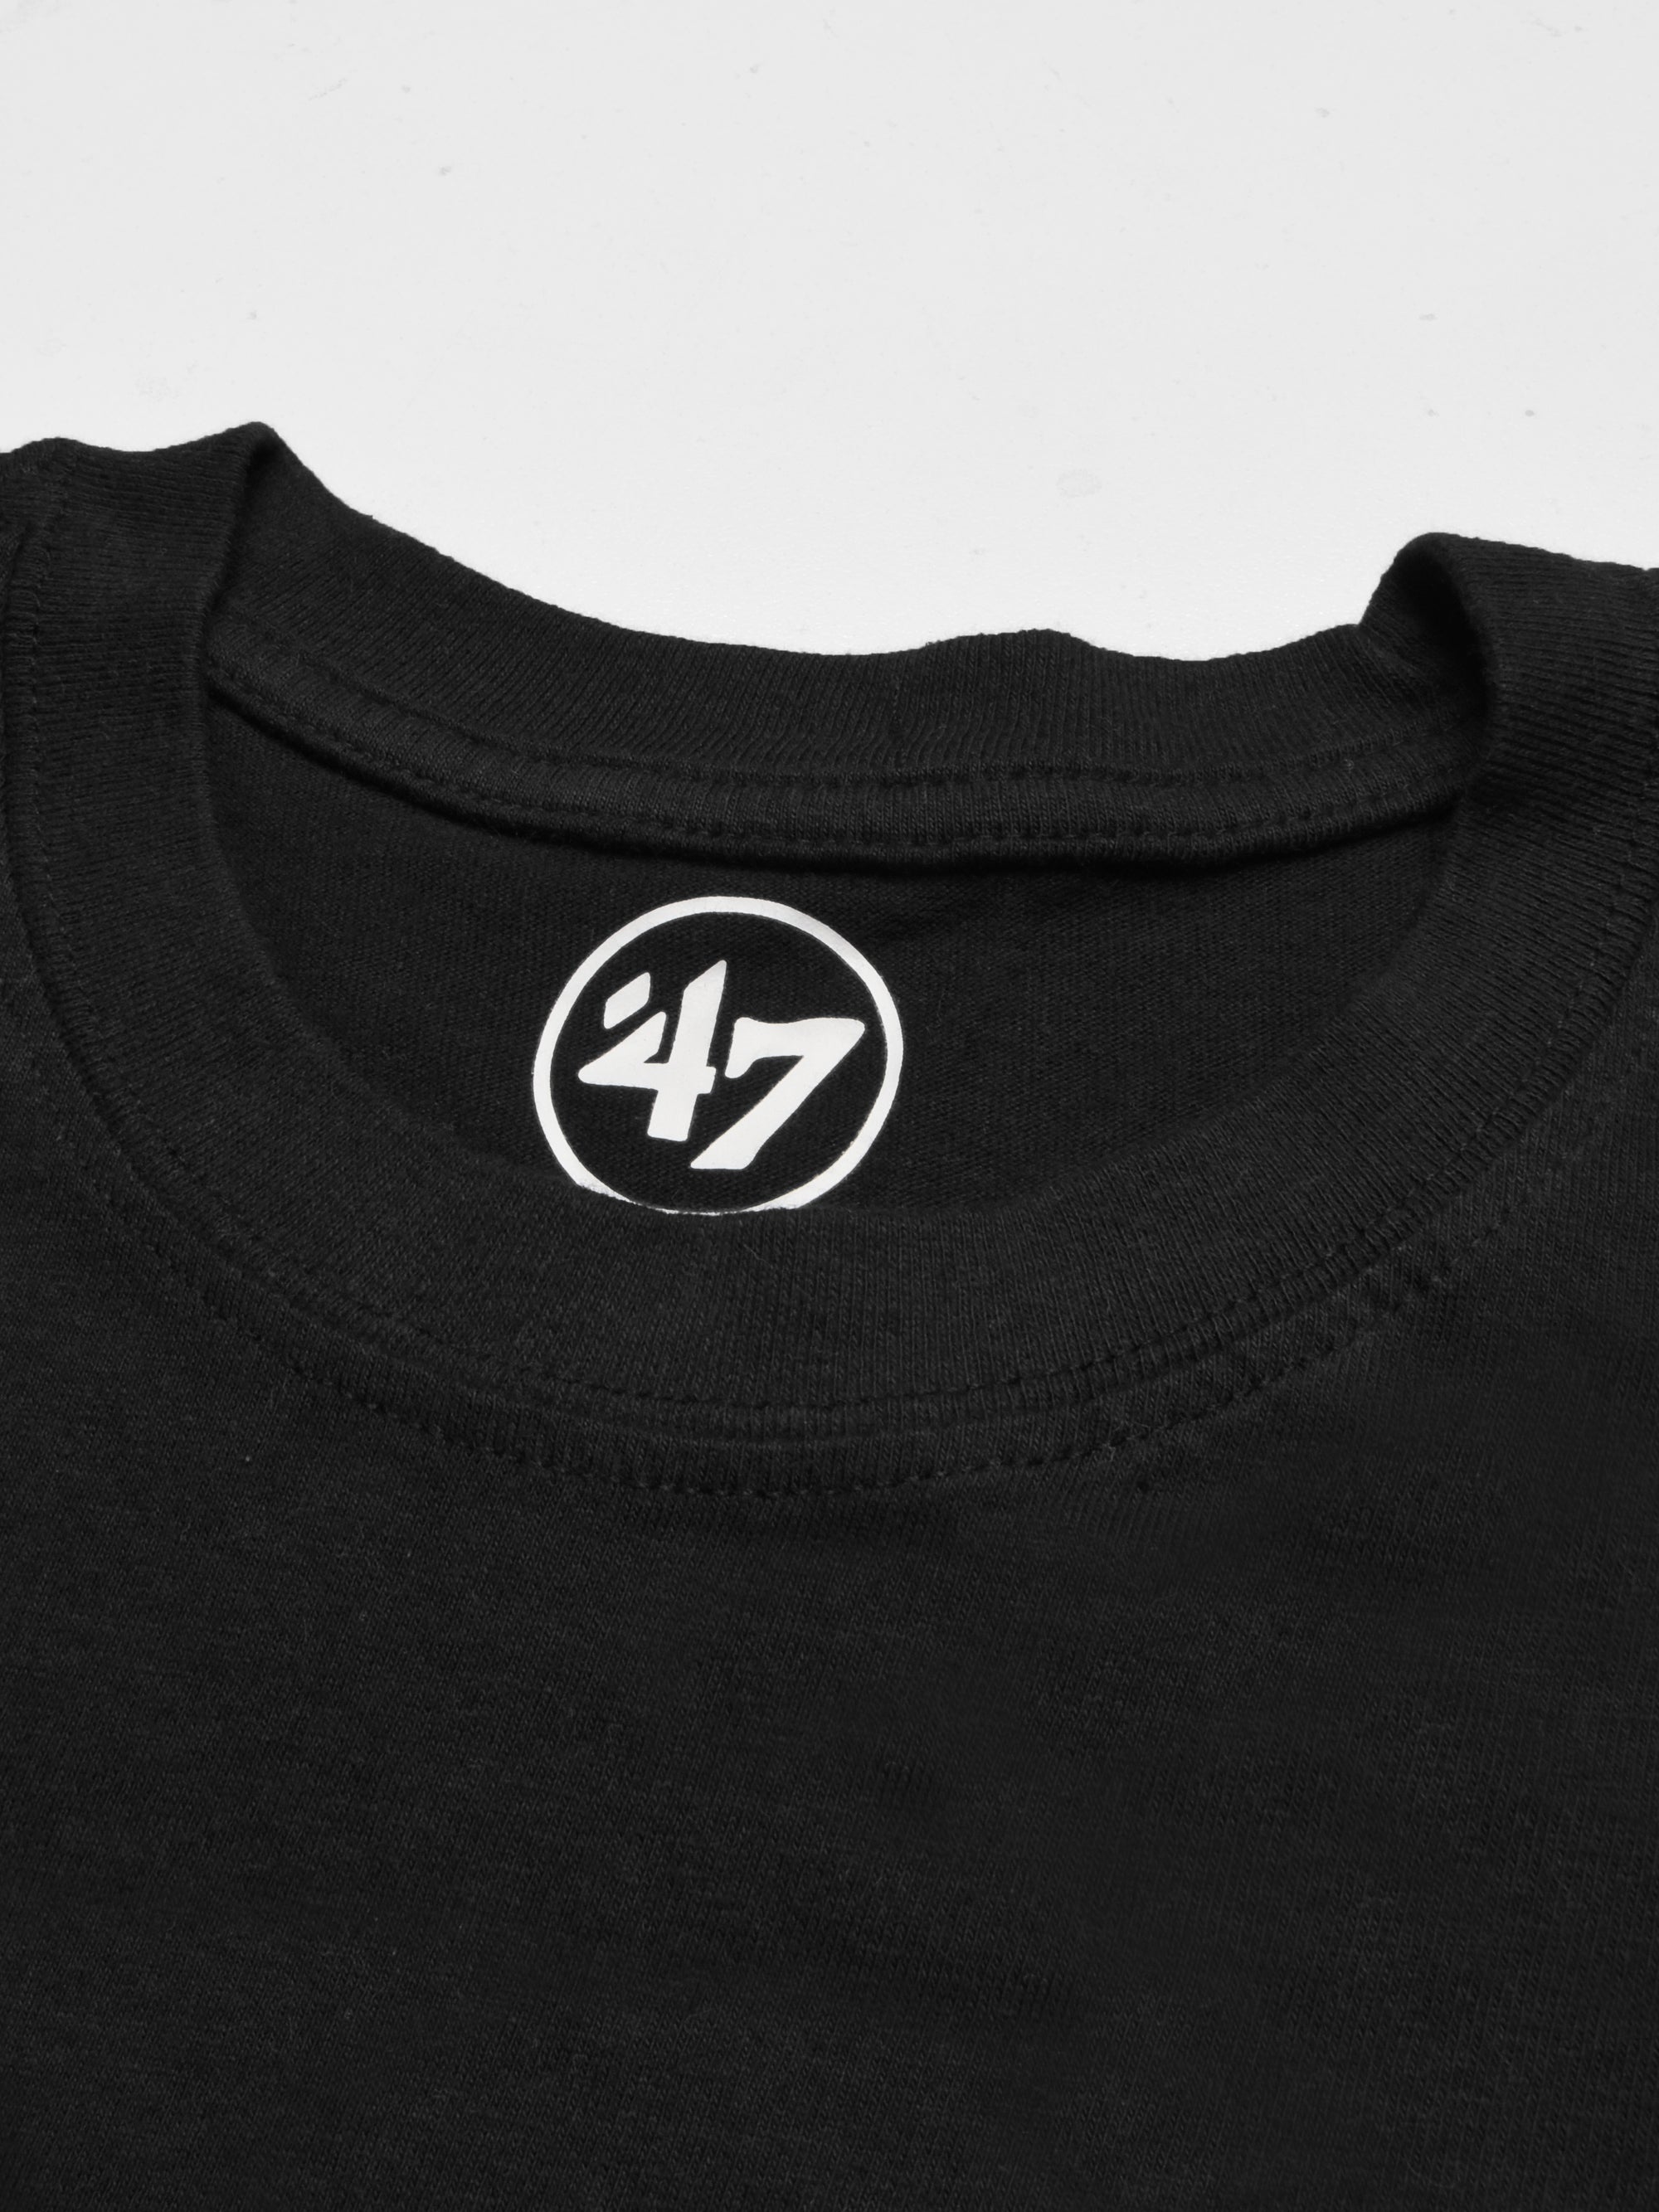 47 Single Jersey Crew Neck Long Sleeve Shirt For Men-Black-SP1839